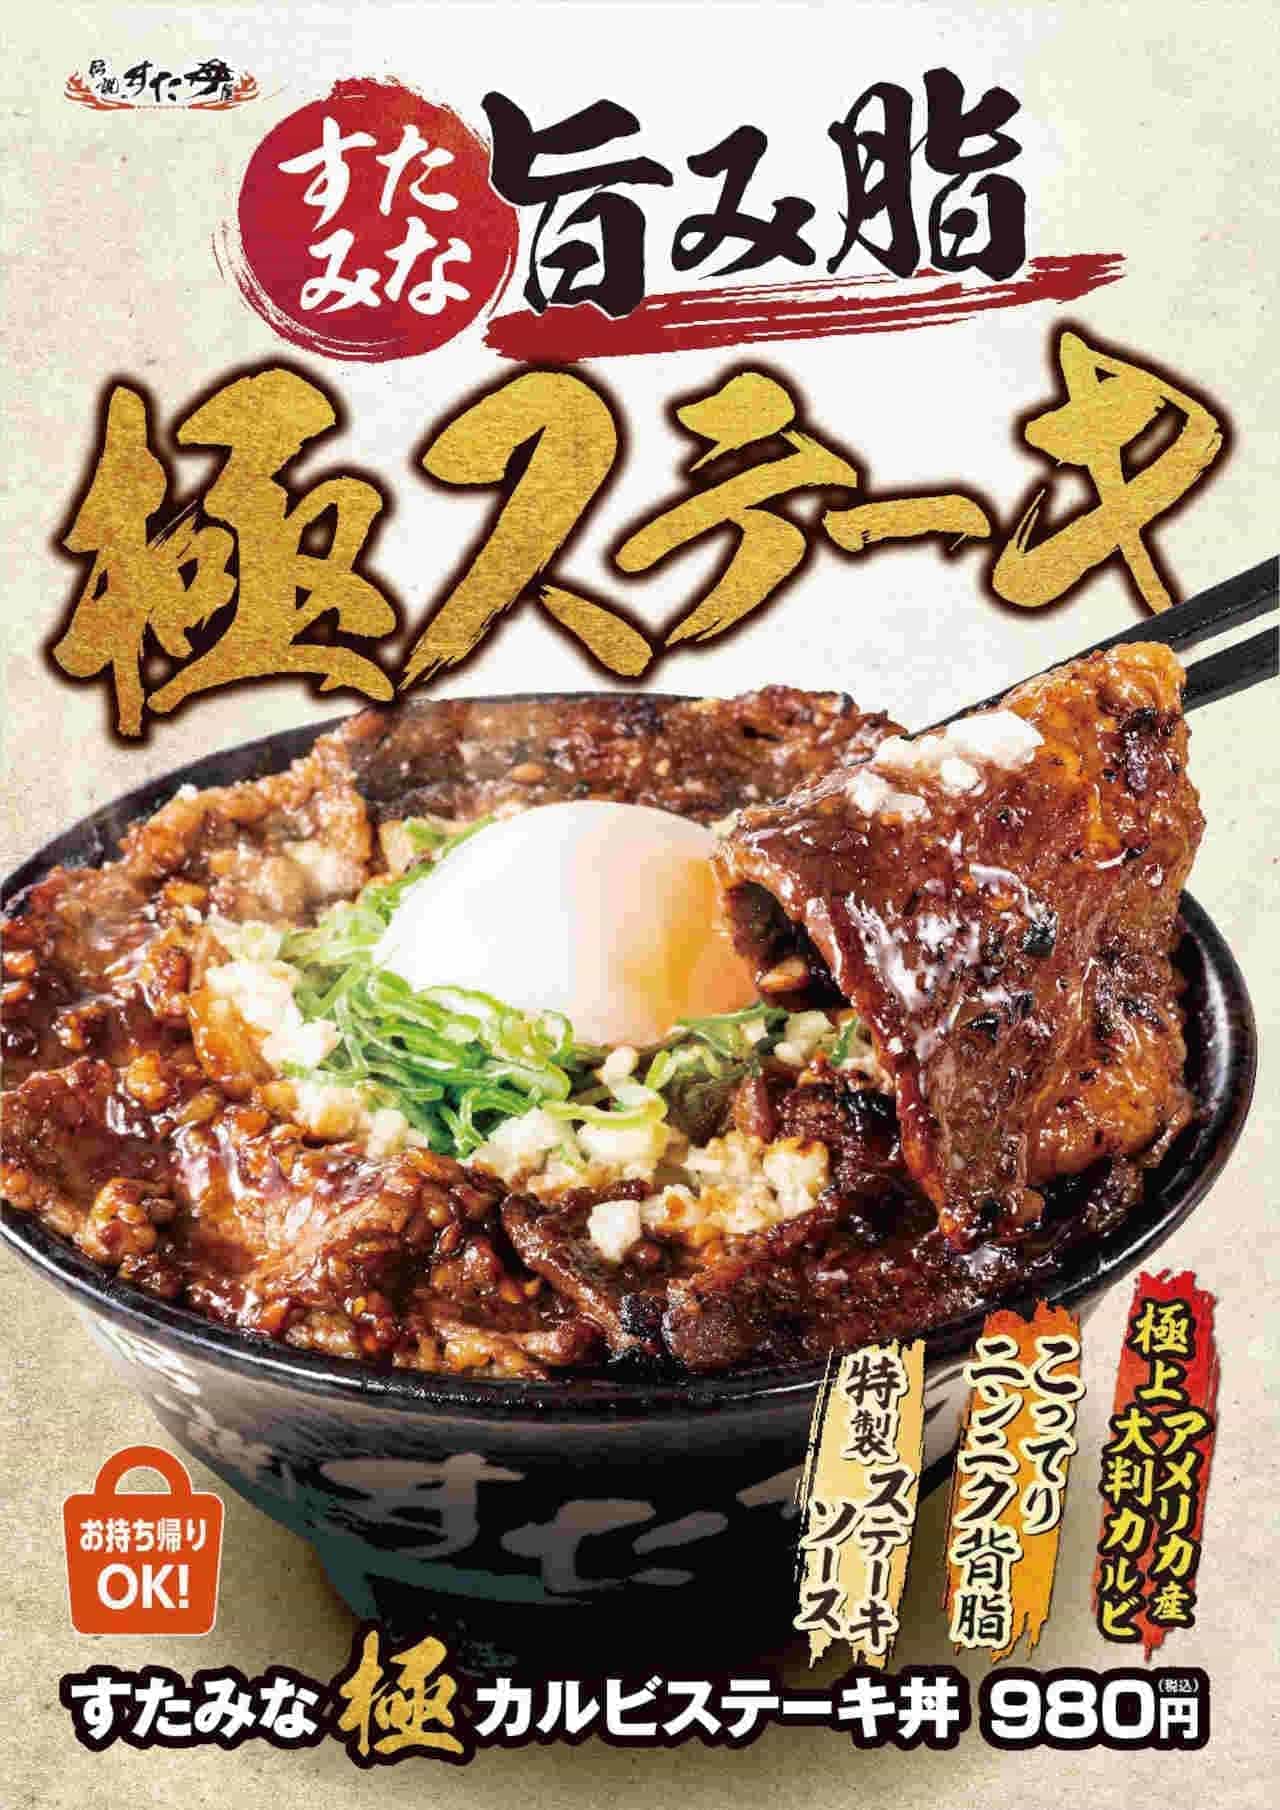 Legendary Sutadon restaurant "Sutamina Goku Calvi Steak Bowl" etc.